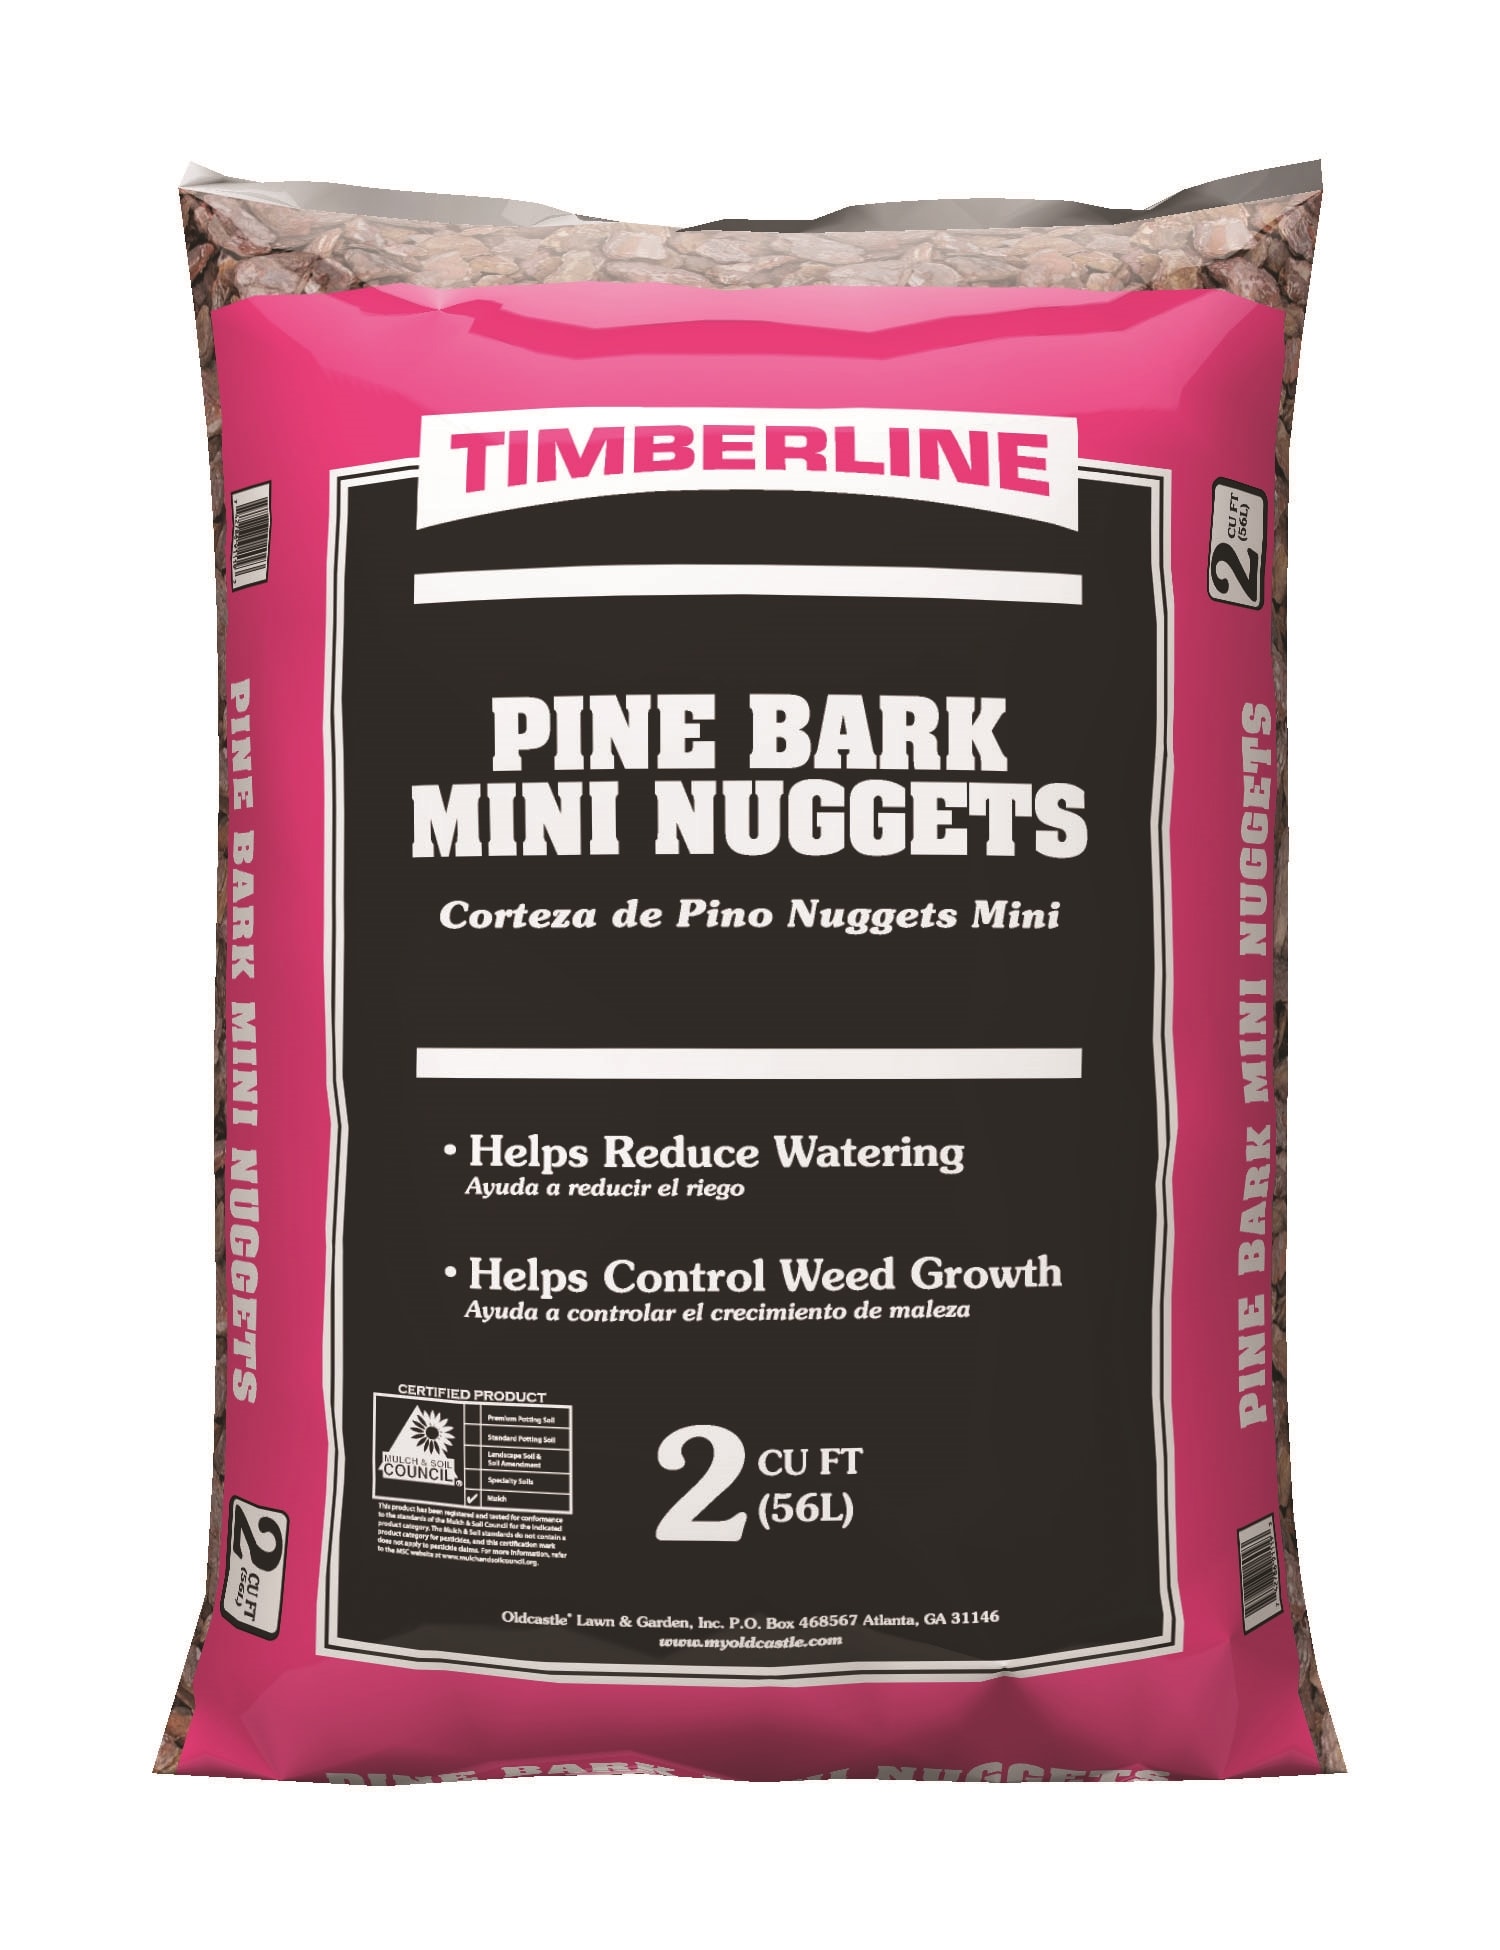 Pine Bark Nuggets - Mulch Manufacturing